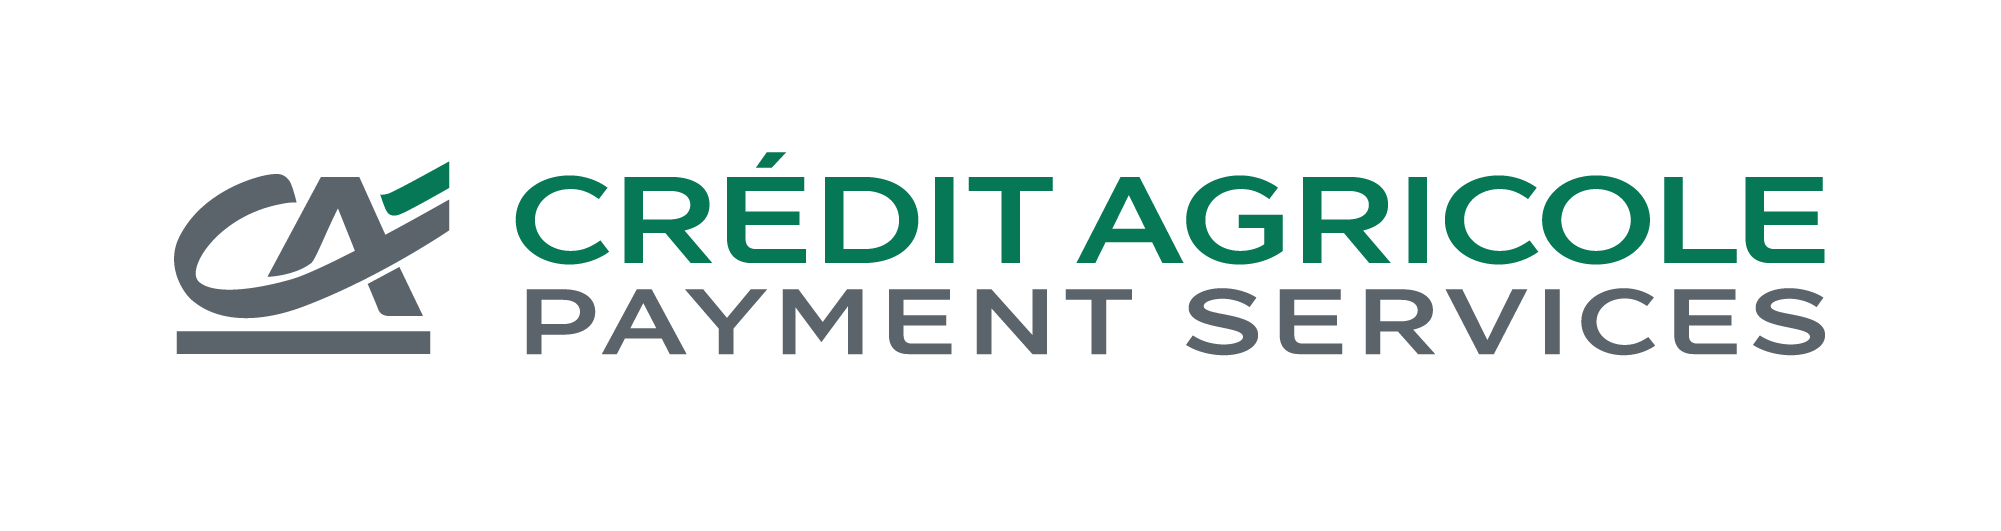 Crdit_Agricole_Payement_Services_logo